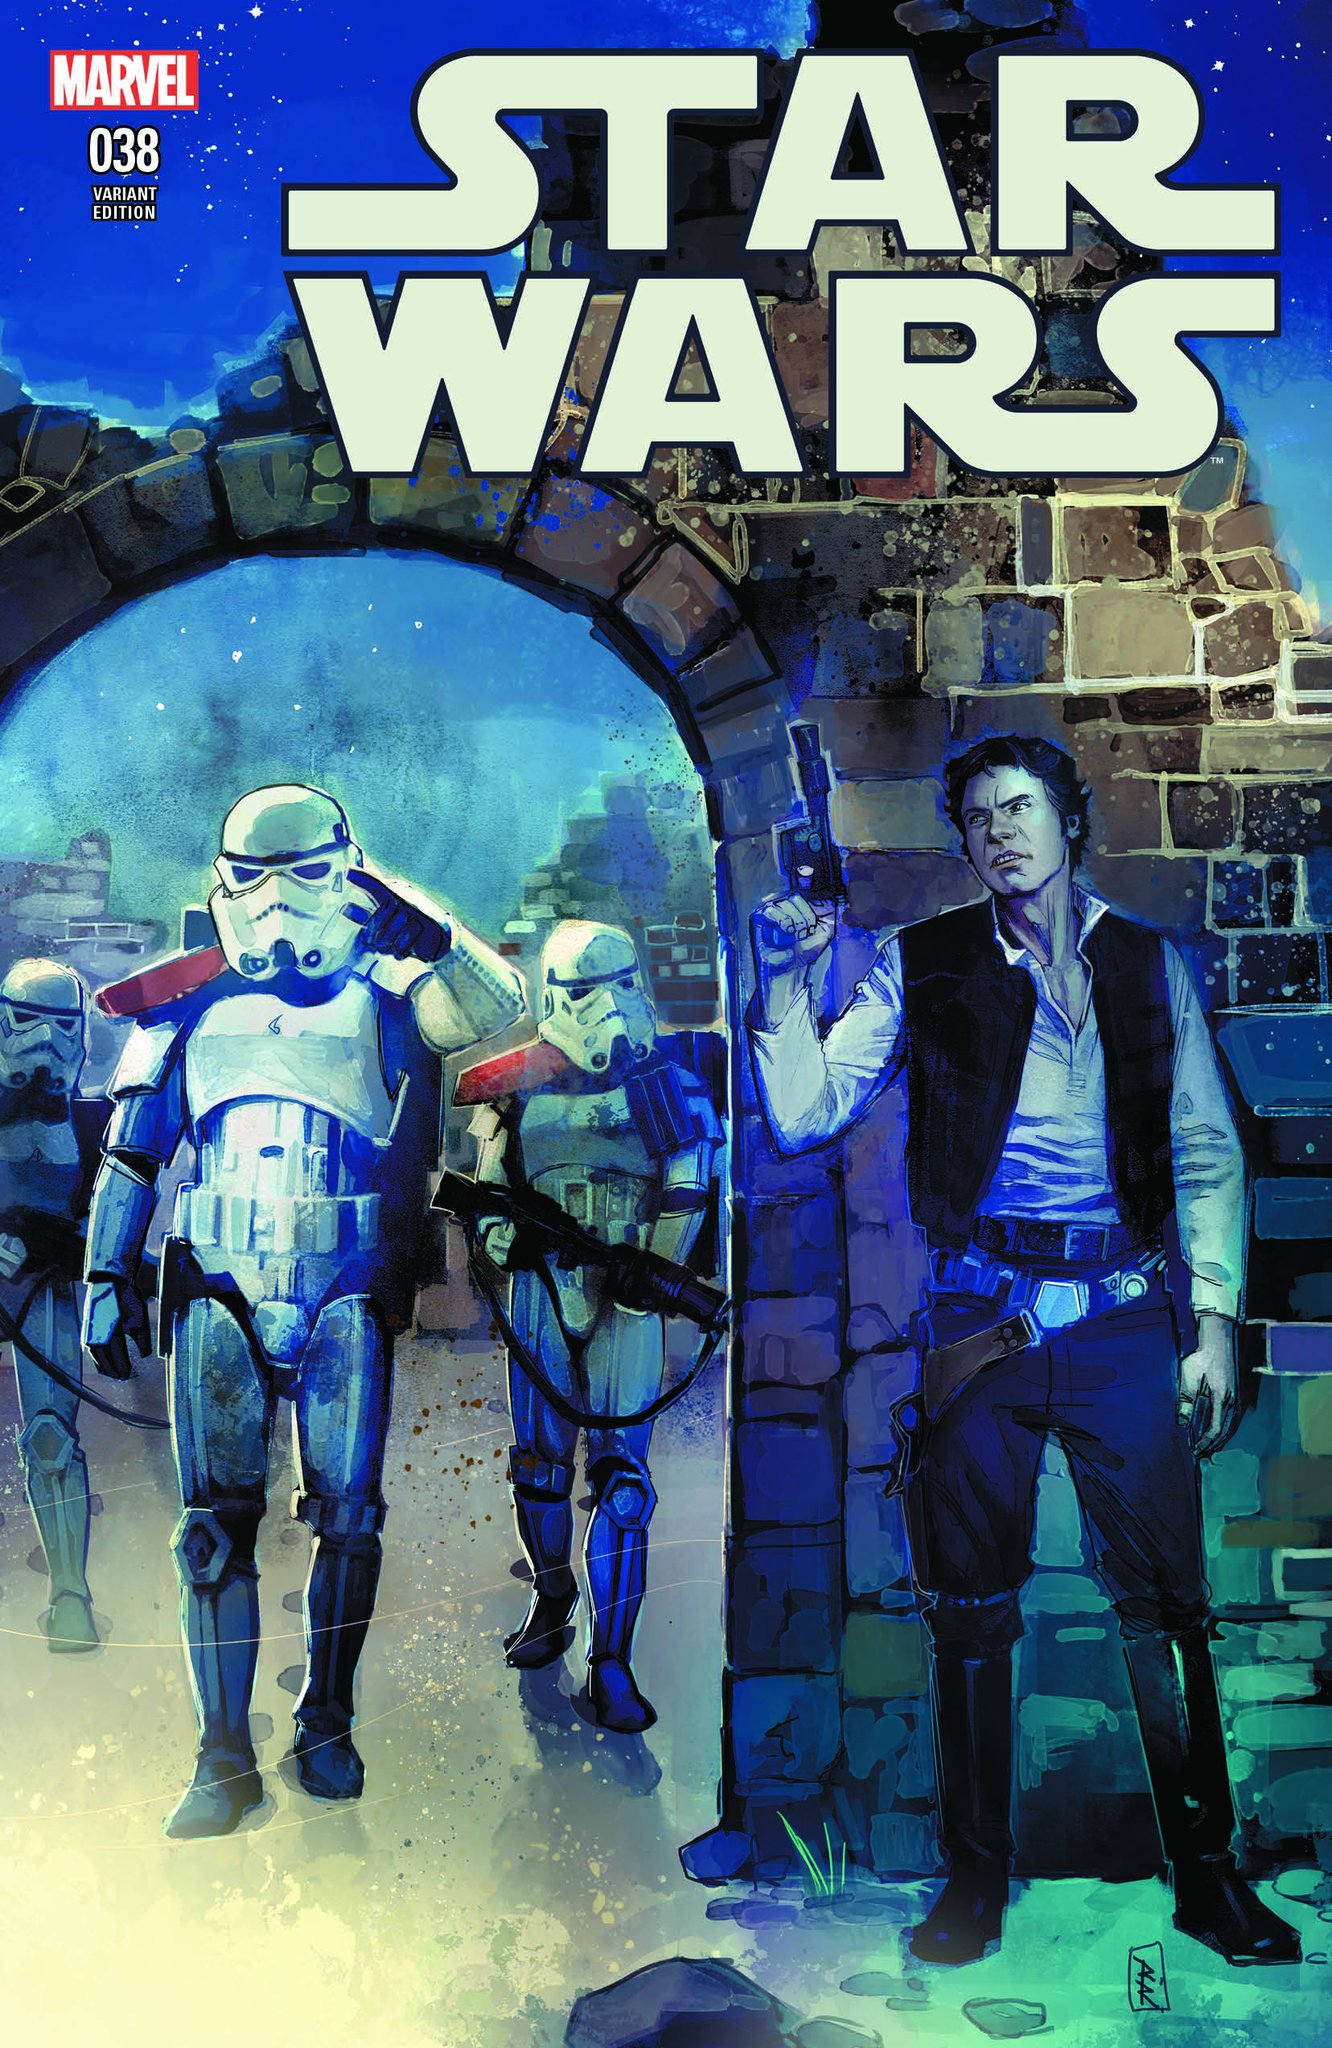 Star Wars #38 (Rod Reis Jesse James Comics Variant Cover) (08.11.2017)